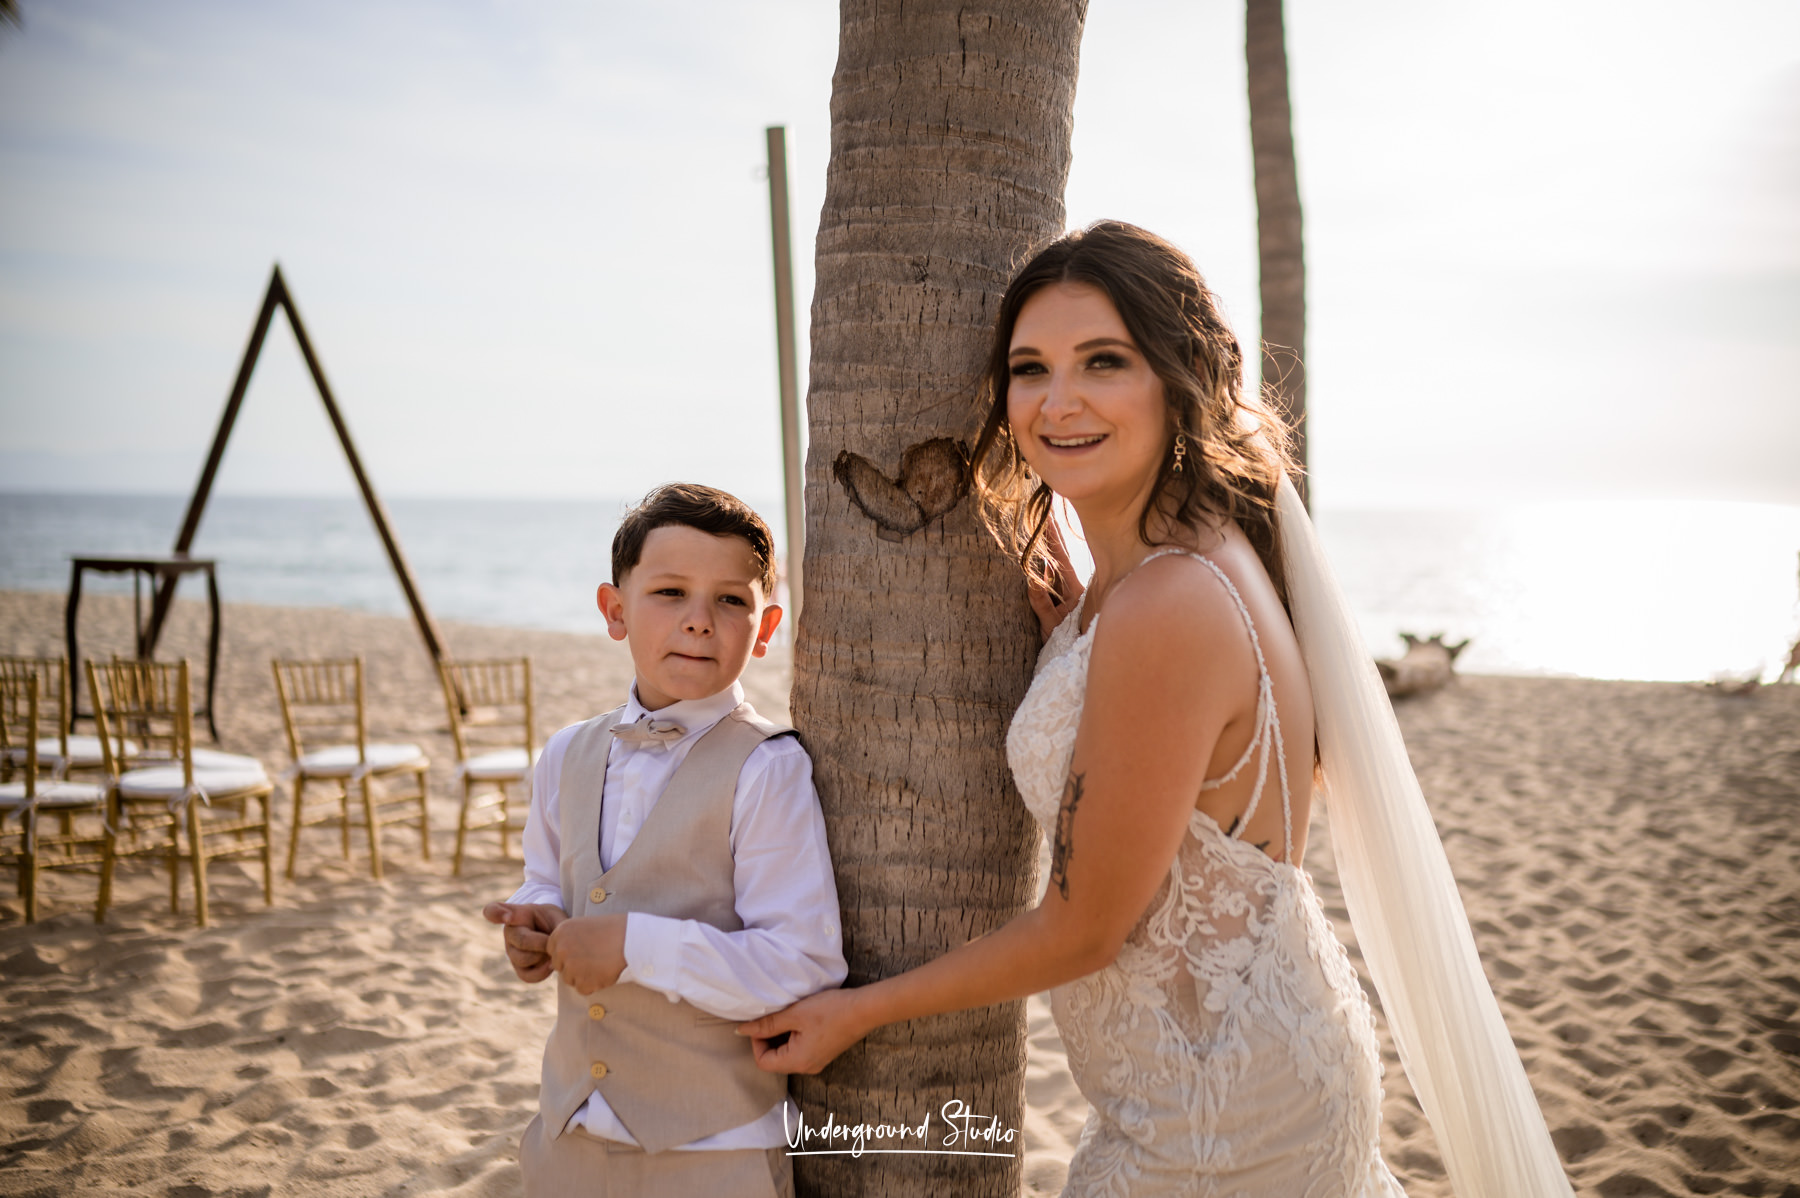 RIU Vallarta Beach Wedding - Destination Wedding Photography and Filming